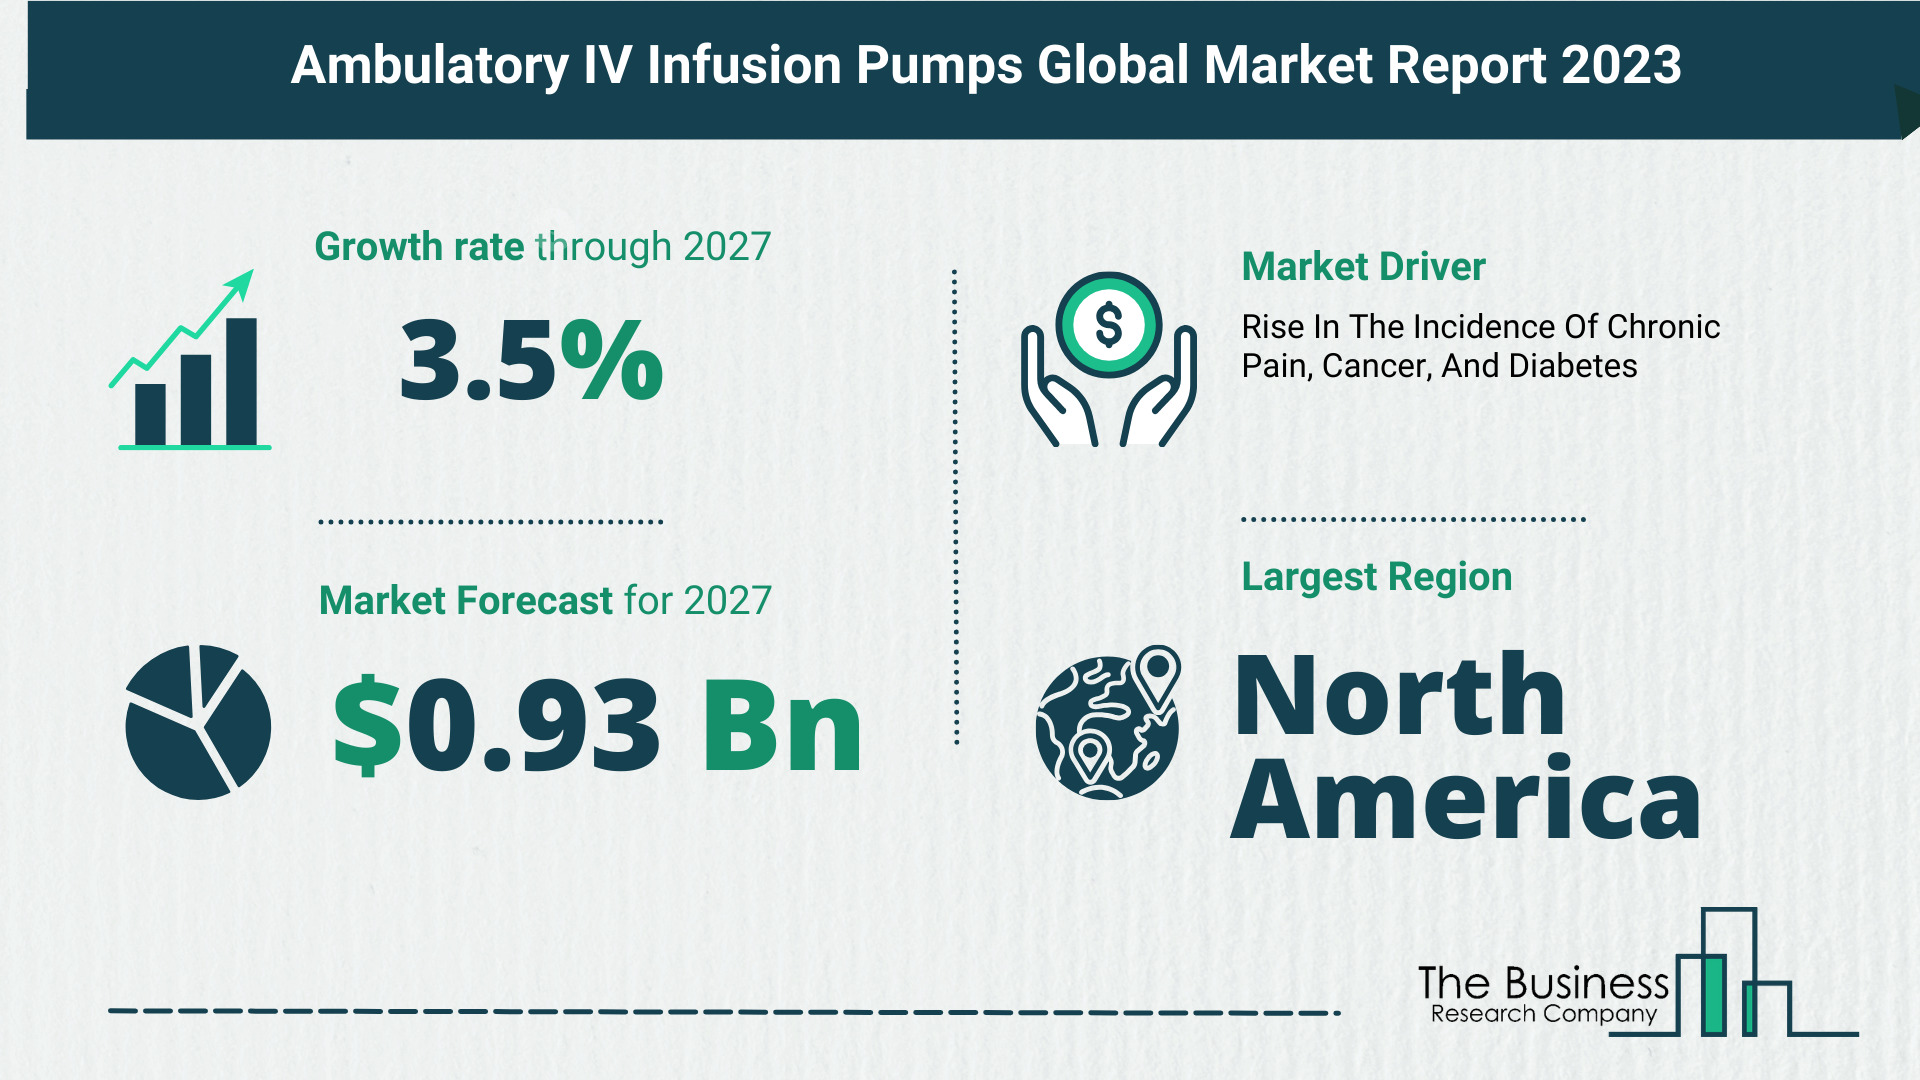 Global Ambulatory IV Infusion Pumps Market Analysis 2023: Size, Share, And Key Trends